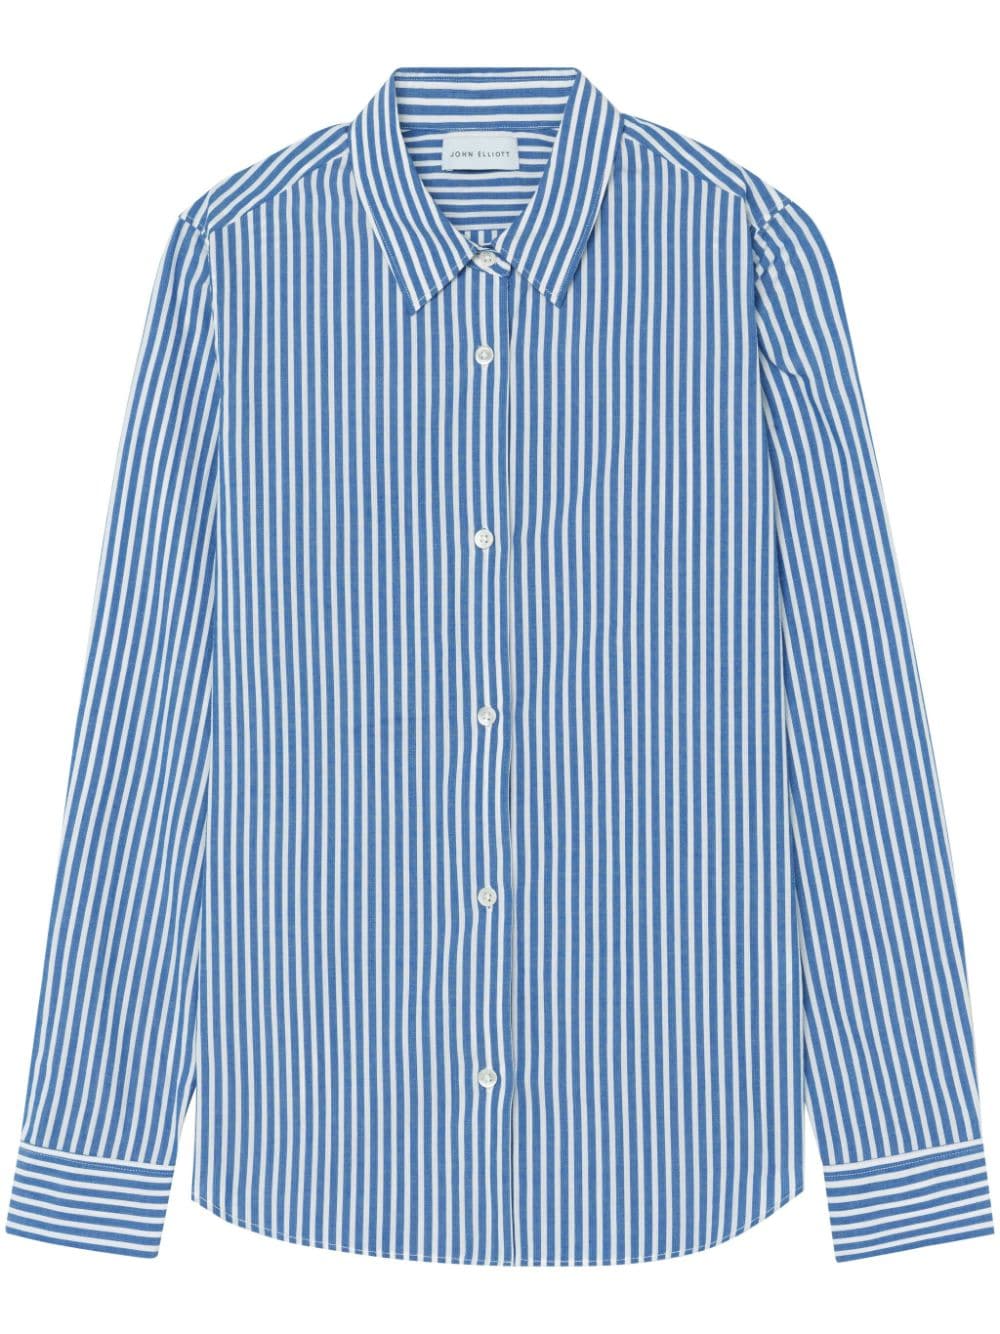 John Elliott Leisure Striped Cotton Shirt In Blue